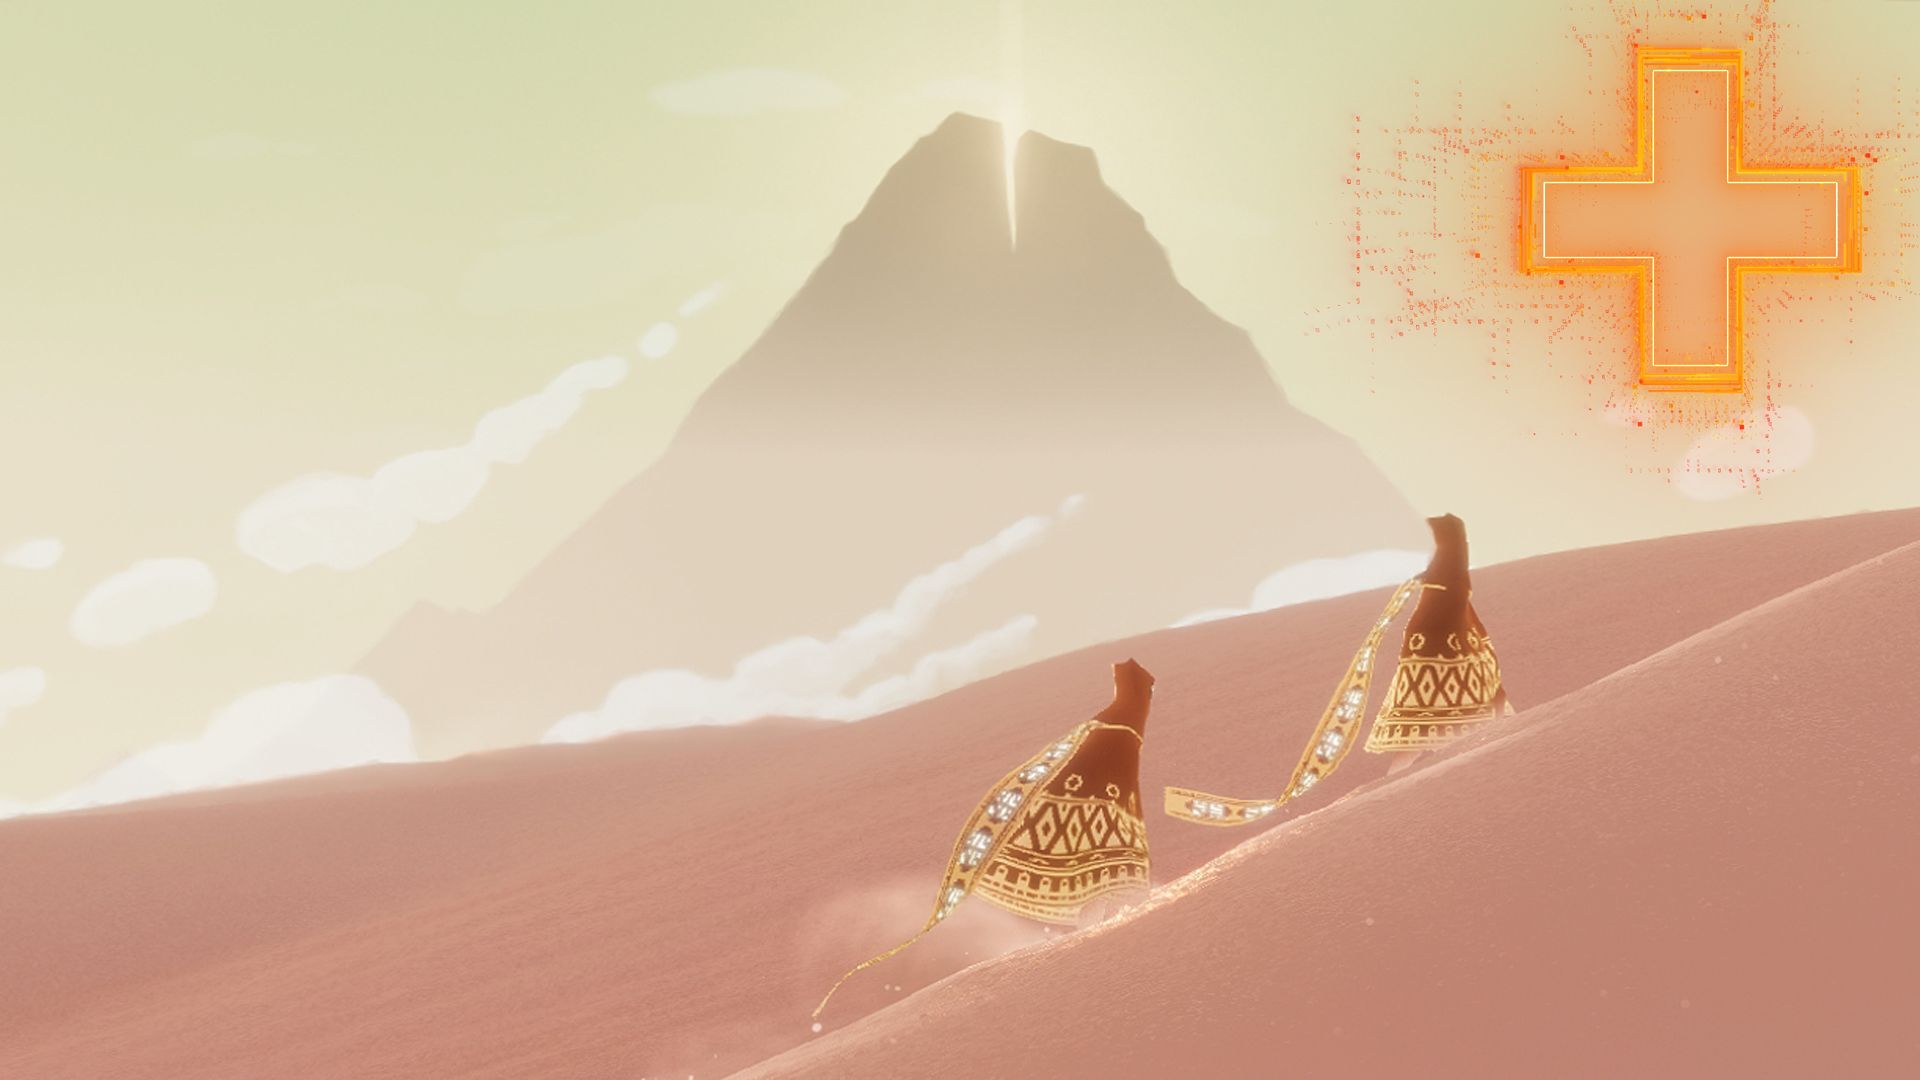 May journey. Journey игра. Journey (игра, 2012). Journey пустыня ps4 Скриншоты thatgamecompany. Джорни путешествие игра.